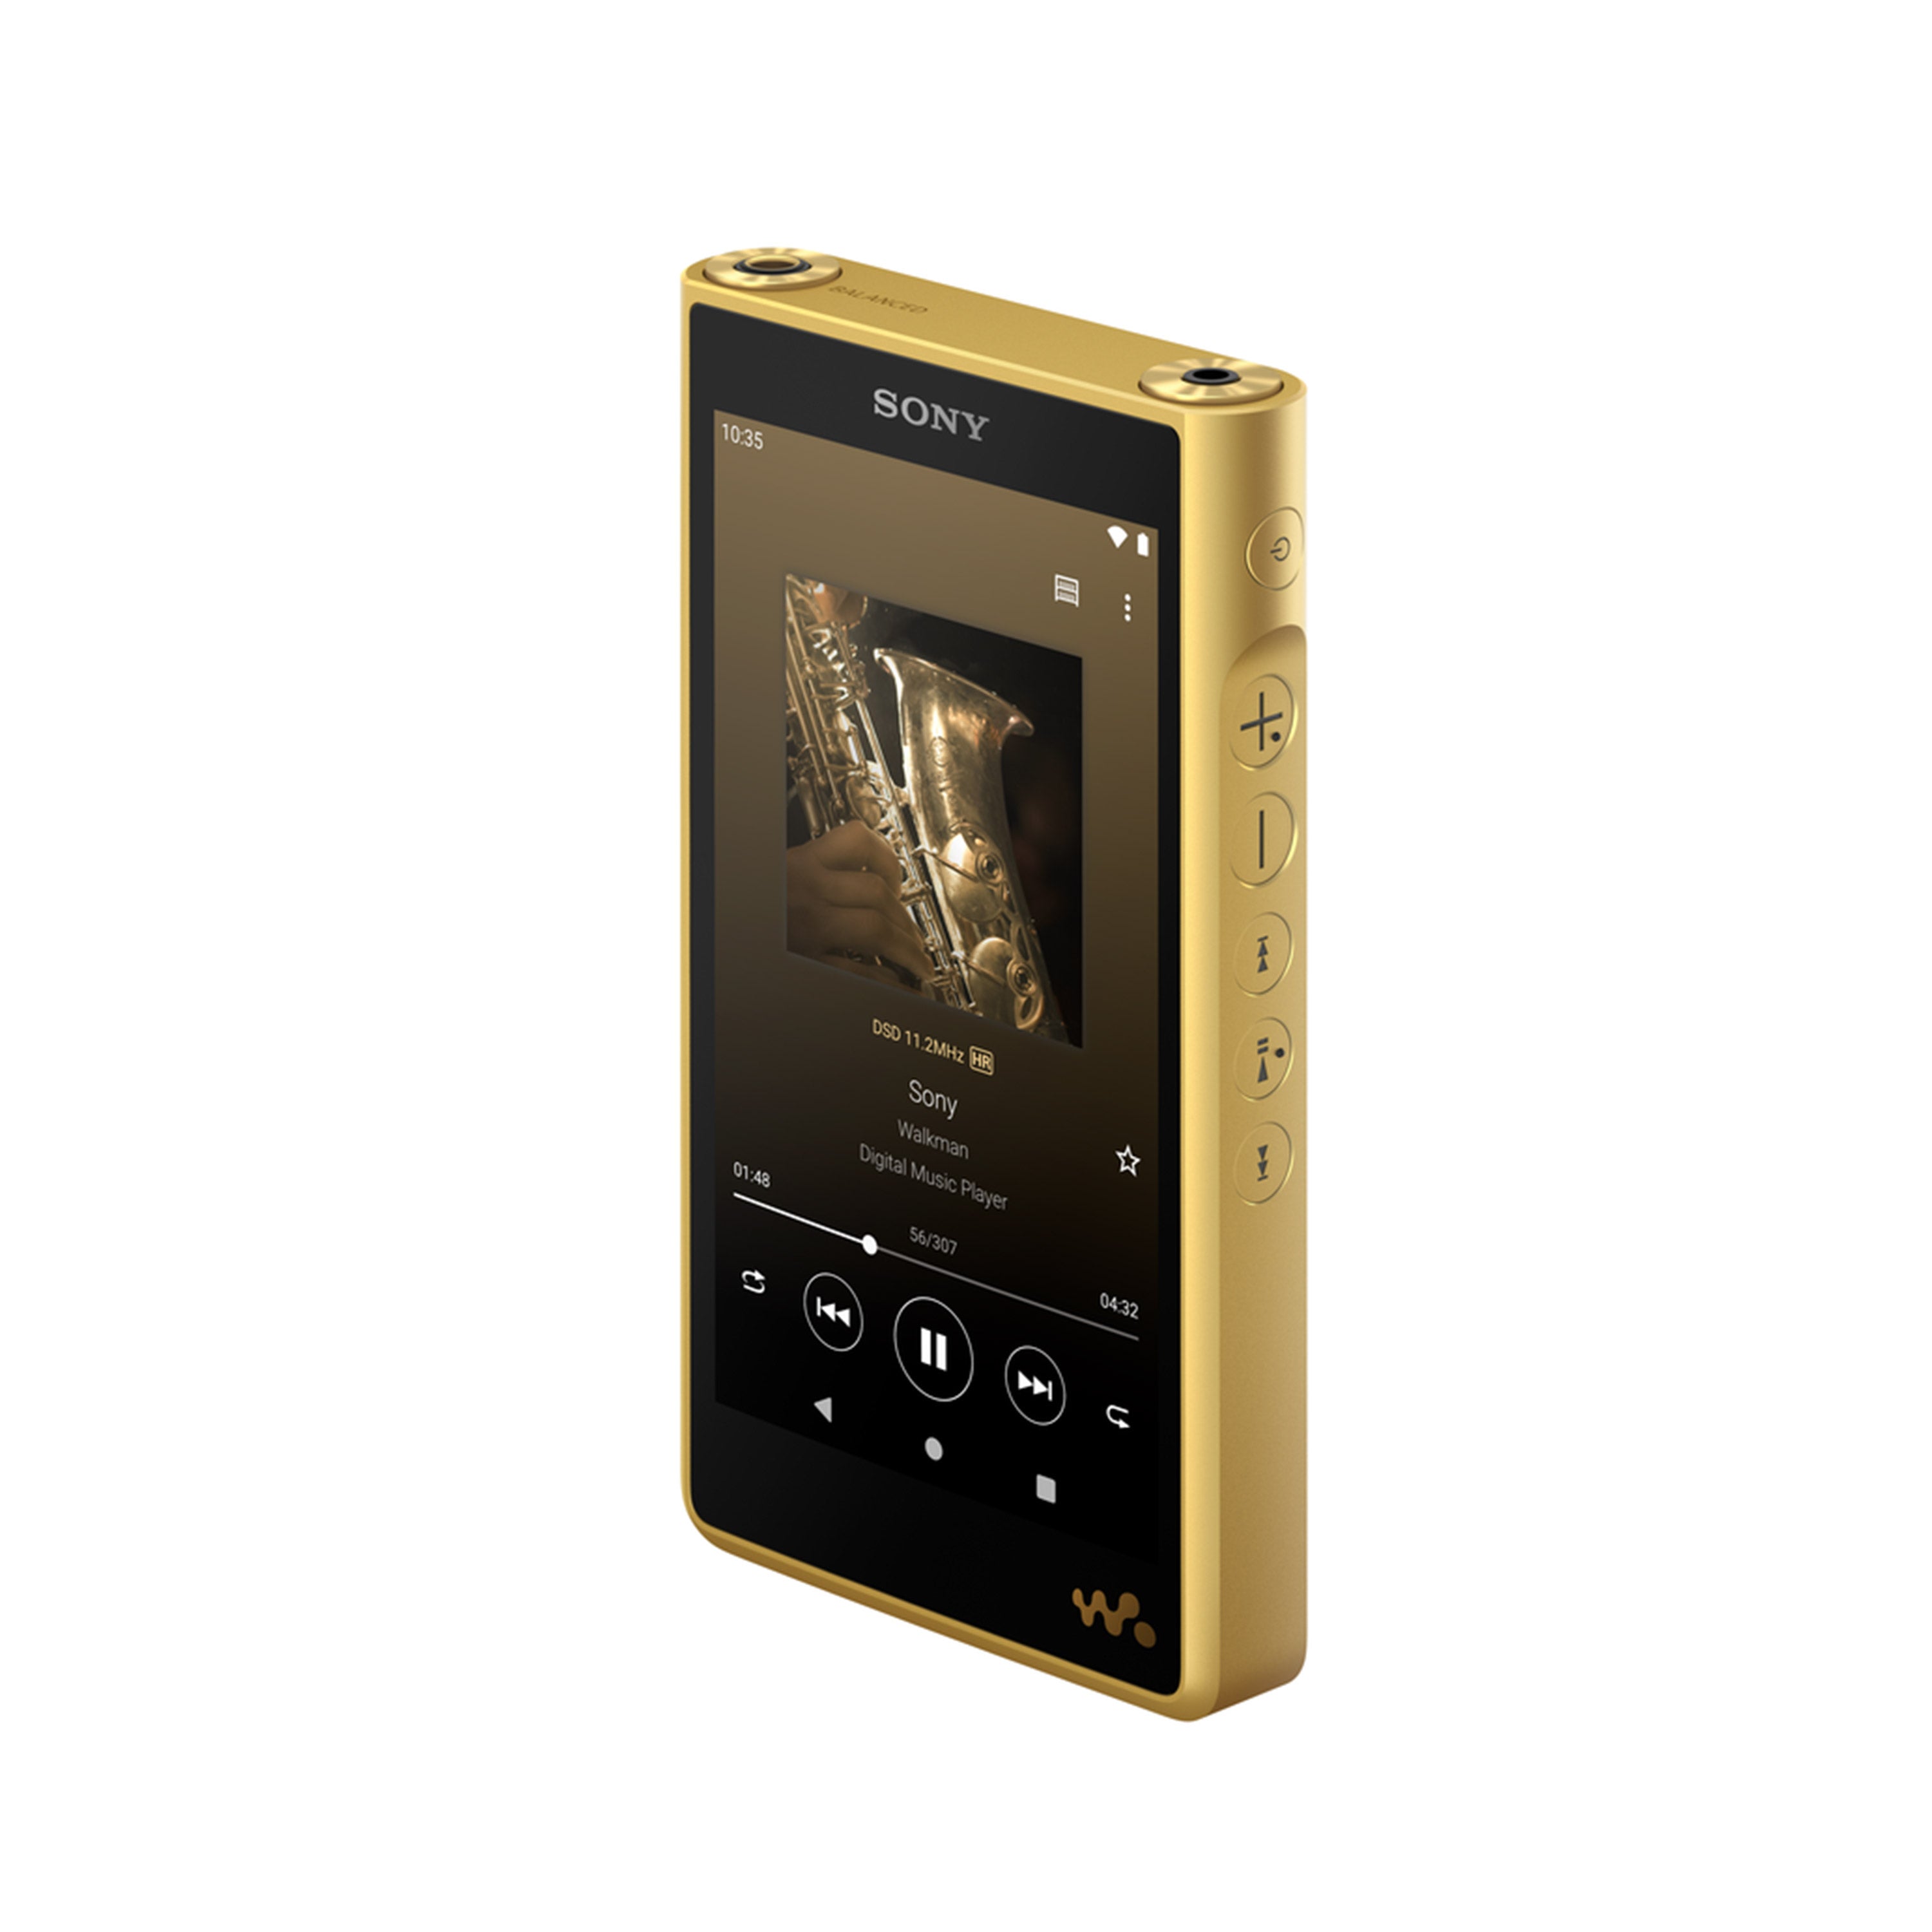 NW WM1ZM2 Signature Series Premium Digital Music Player — The Sony